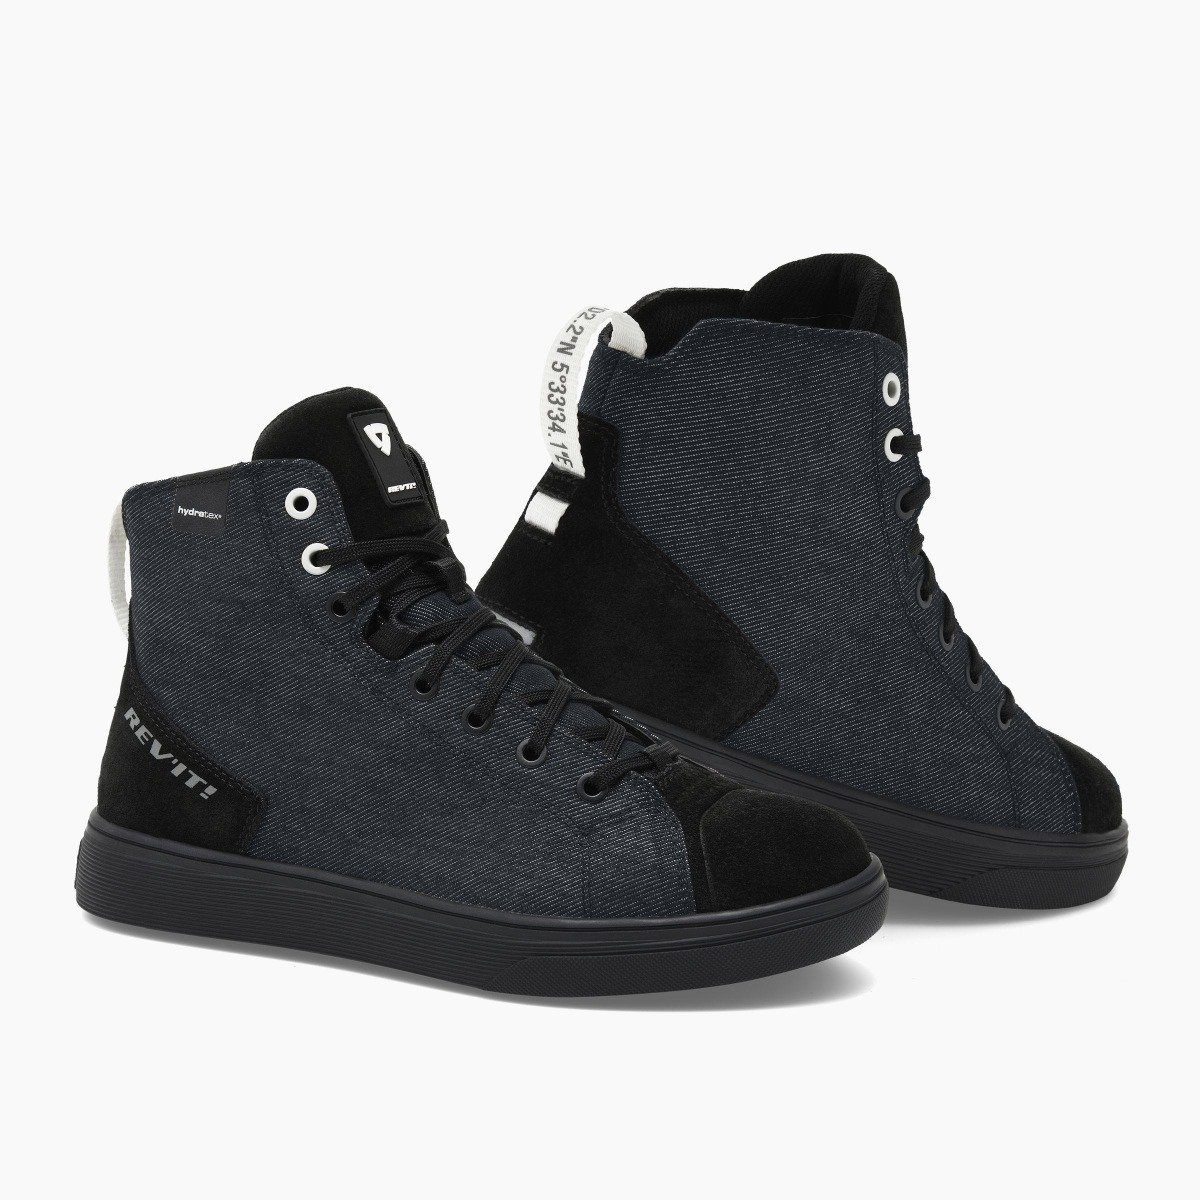 Image of REV'IT! Delta H2O Shoes Lady Dark Blue Black Size 41 ID 8700001307260